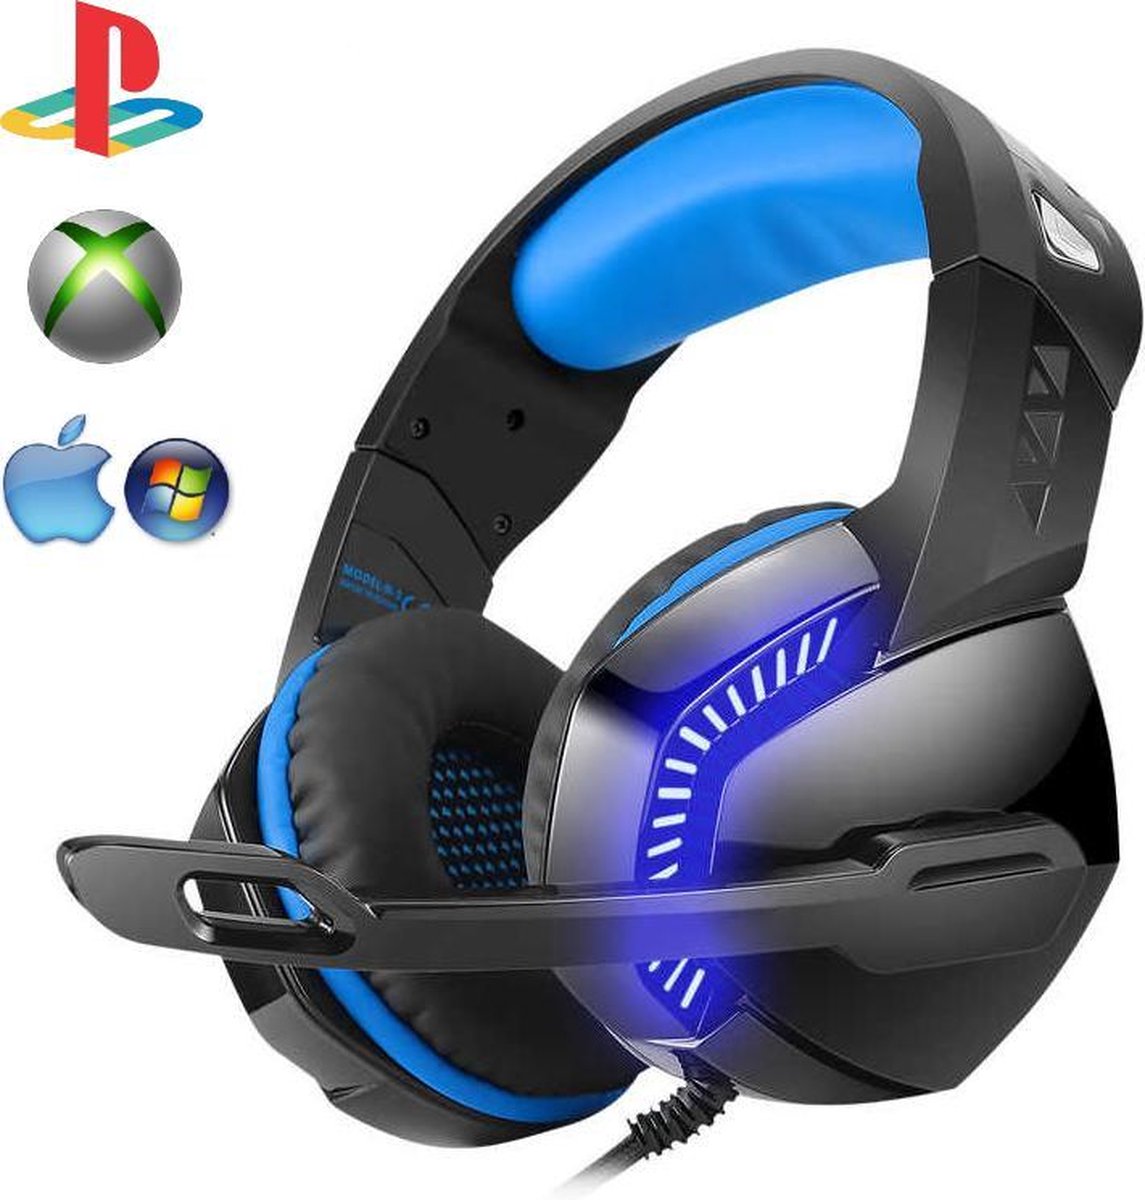 Gaming headset met Microfoon en verlichting - Headset - Game Headset - Headset met microfoon - Zwart/blauw - Gaming Headset PS4 en PC - Led verlichting - Ruisonderdrukkende Microfoon